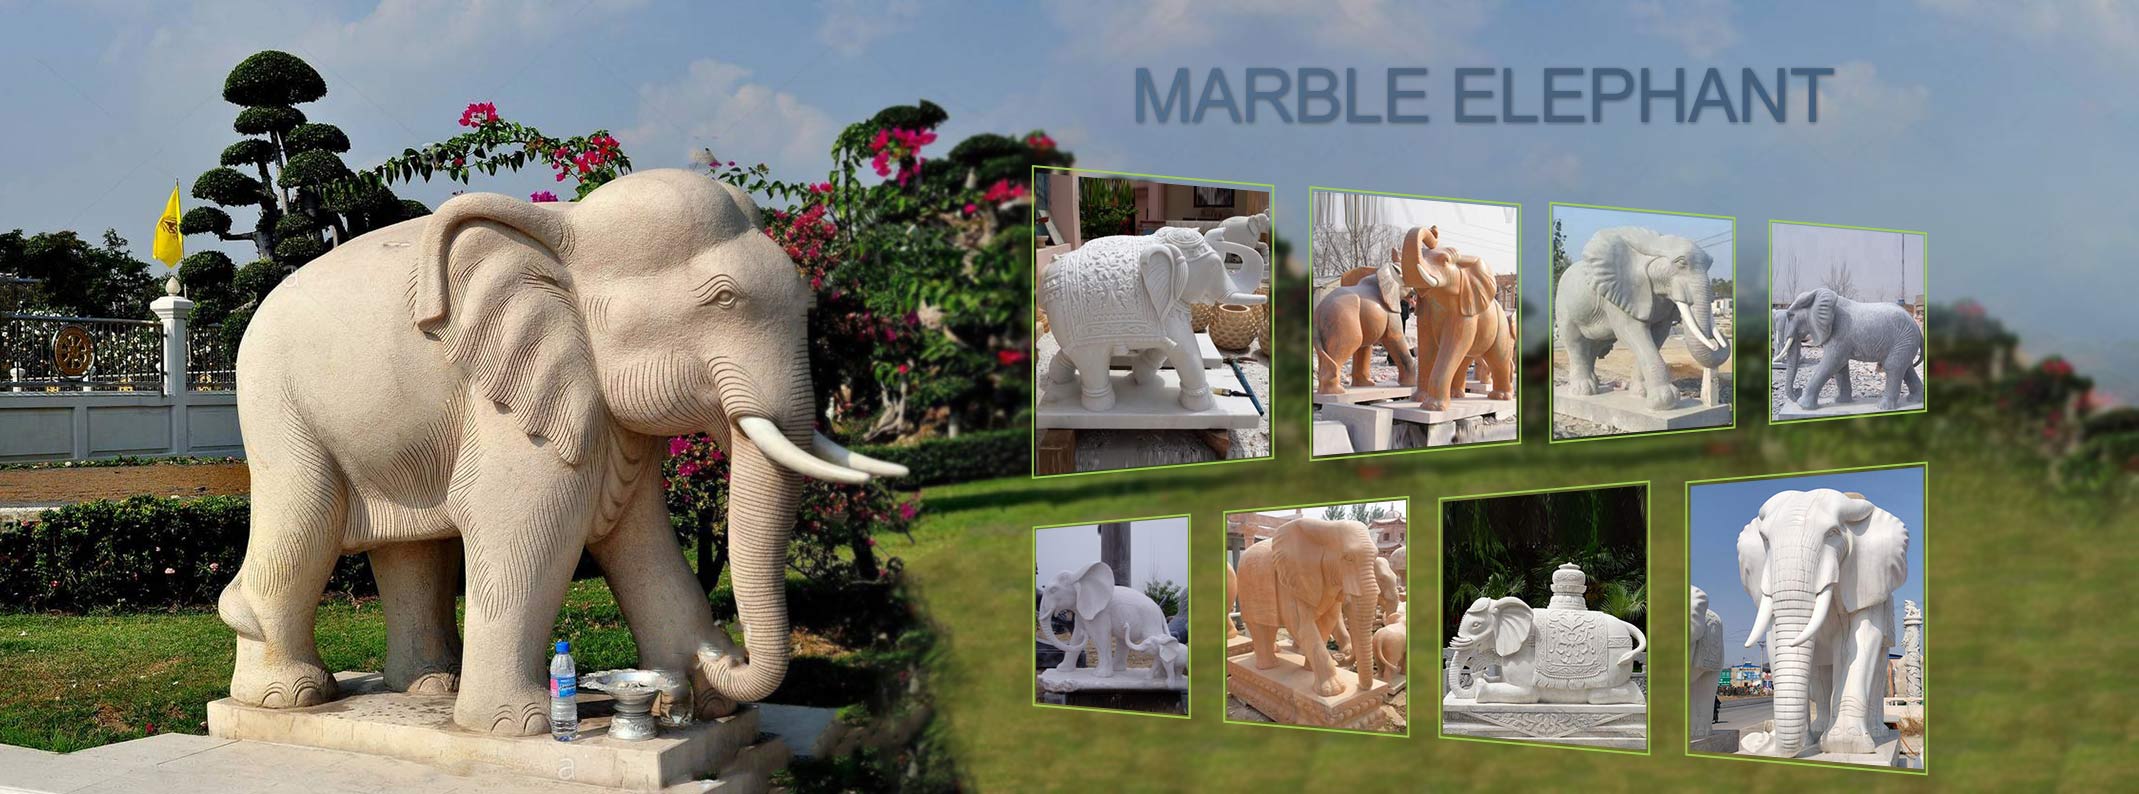 Marble Elephant Garden Statue